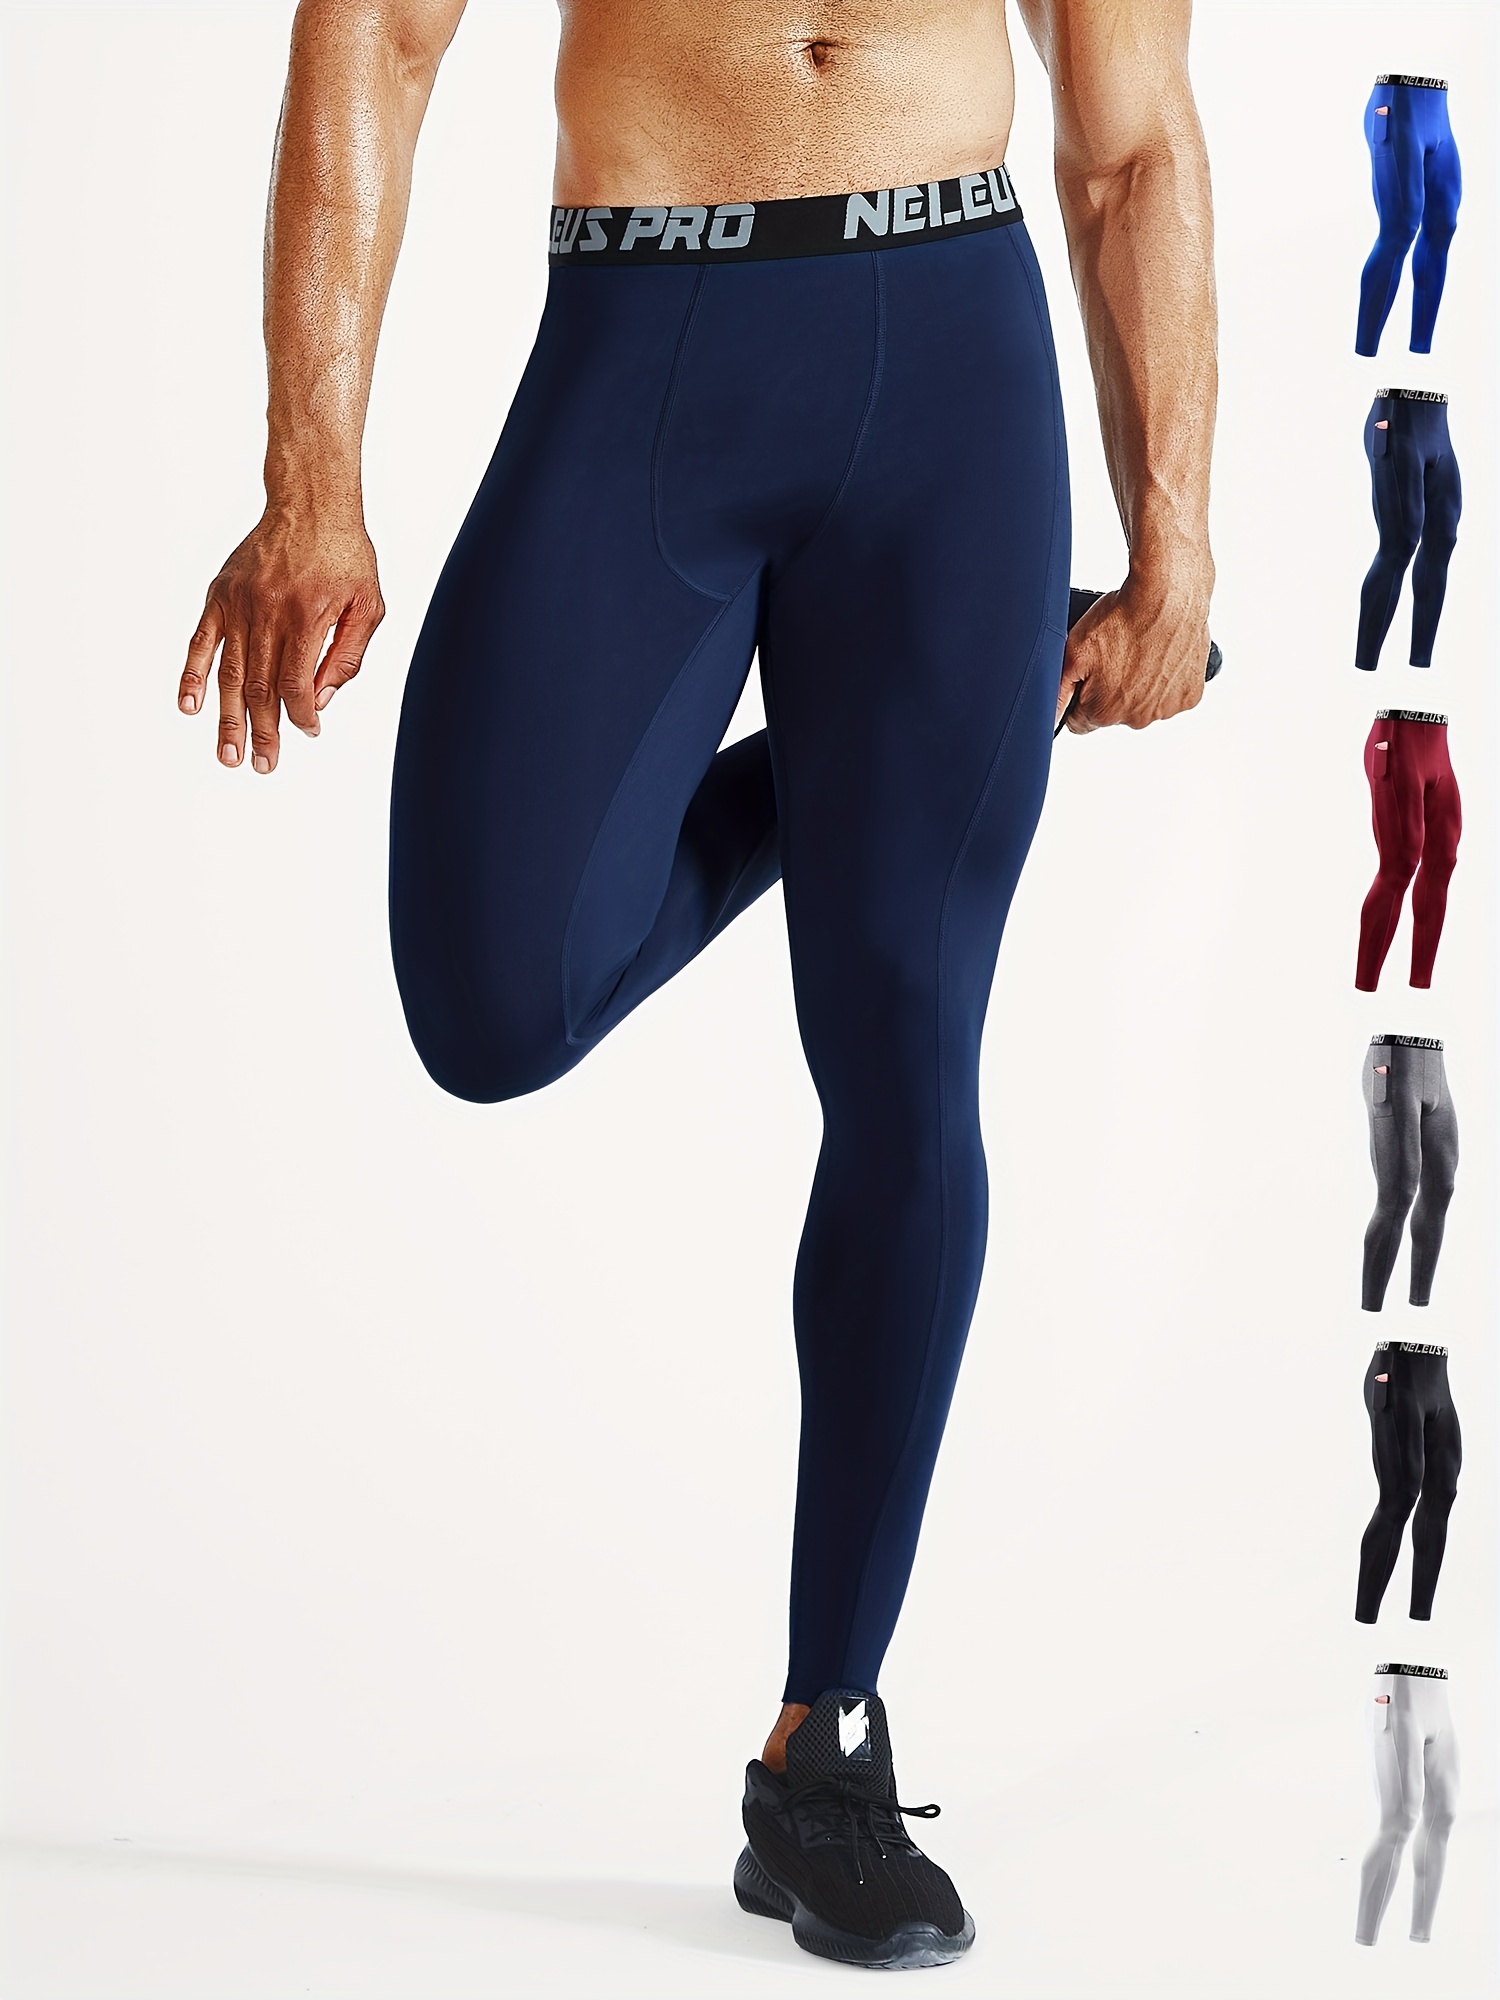 Dryarn fibre compression sports leggings for men and women